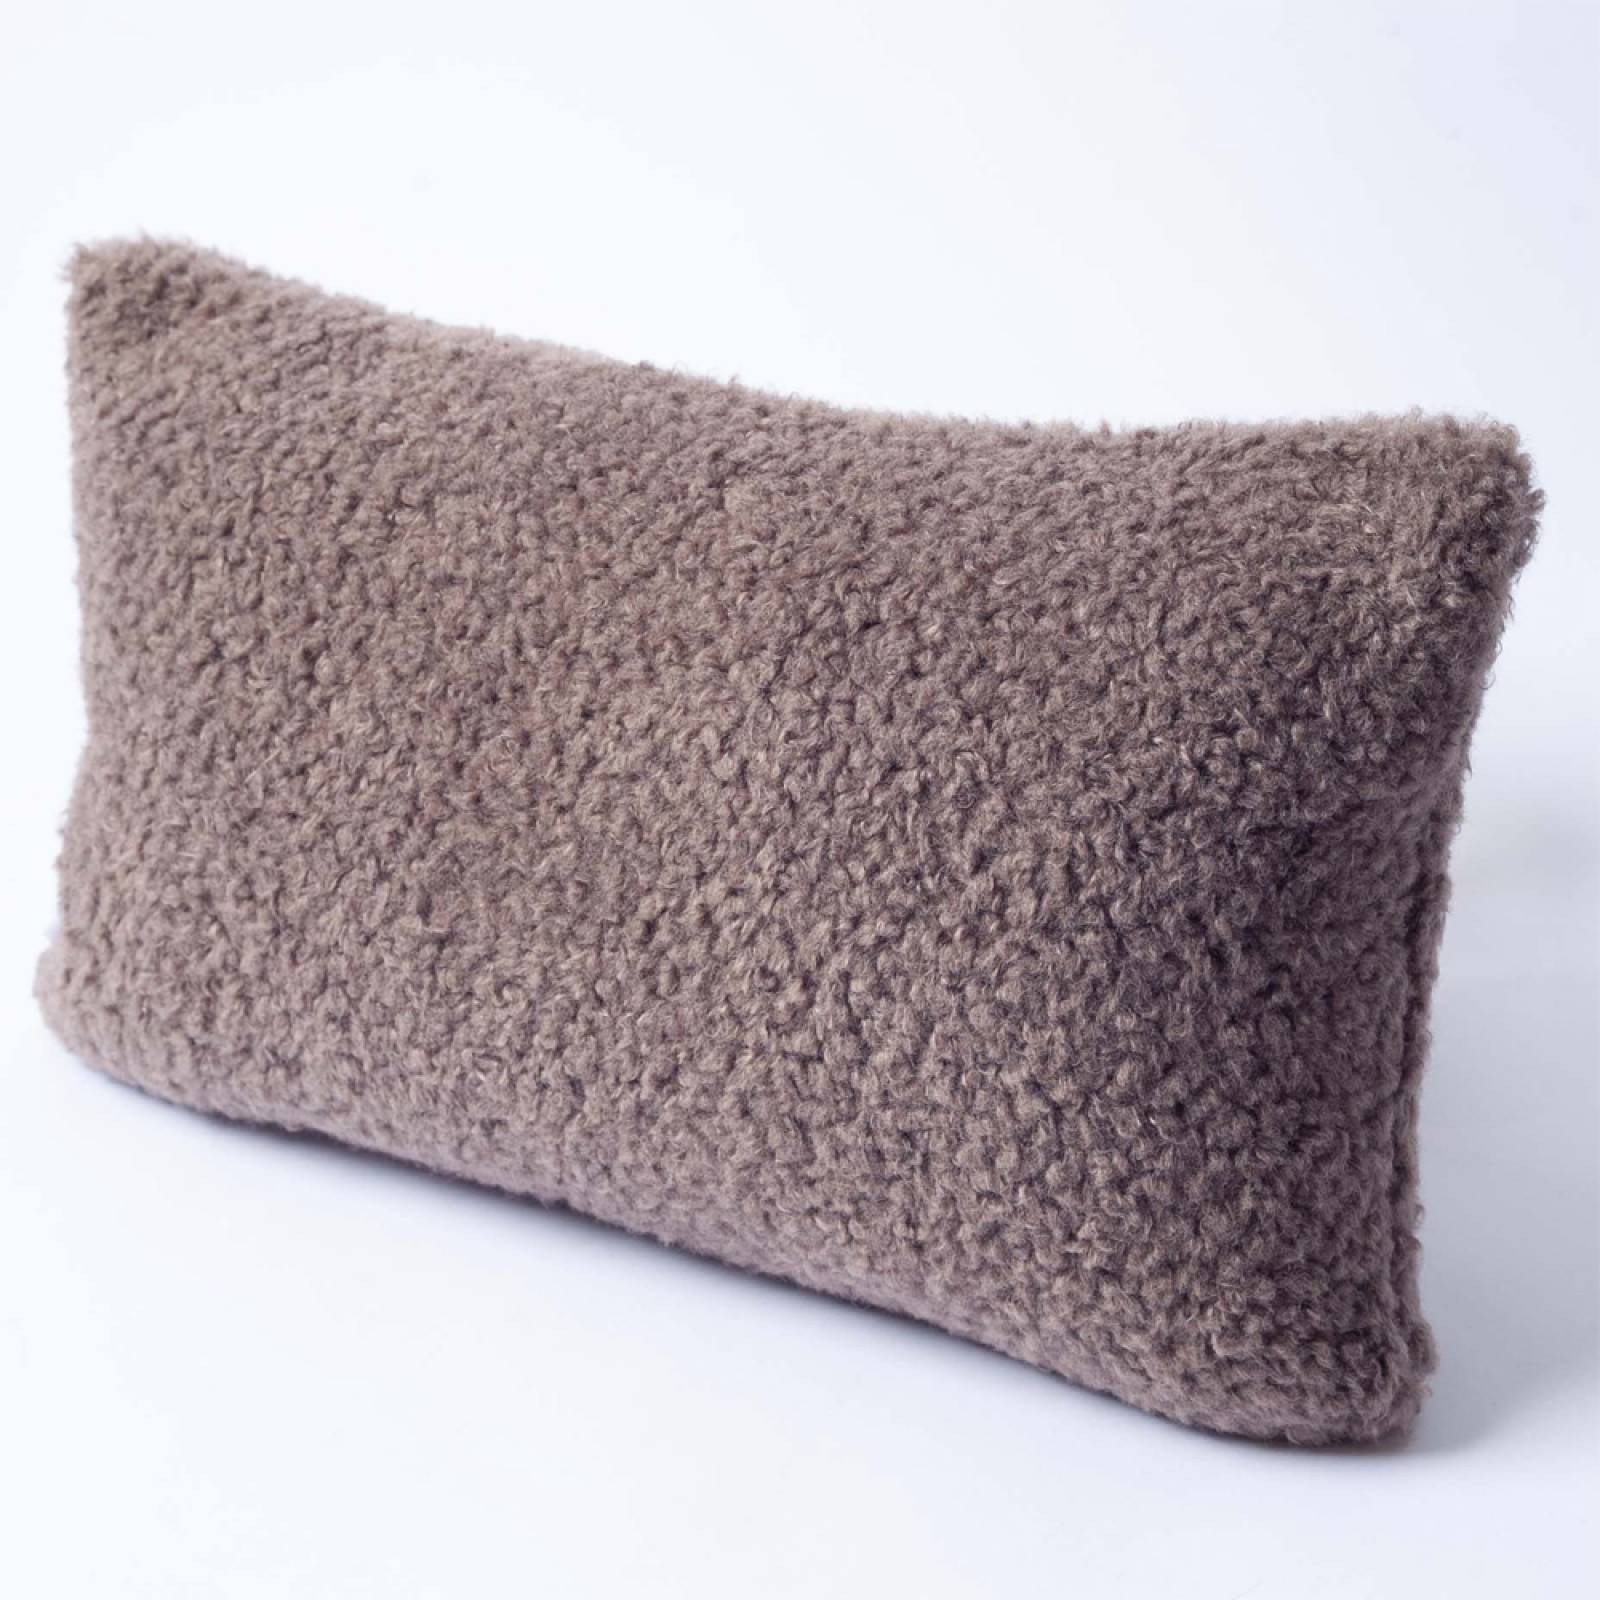 Rectangular Faux Sheepskin Cushion In Cappuccino 30x50cm thumbnails